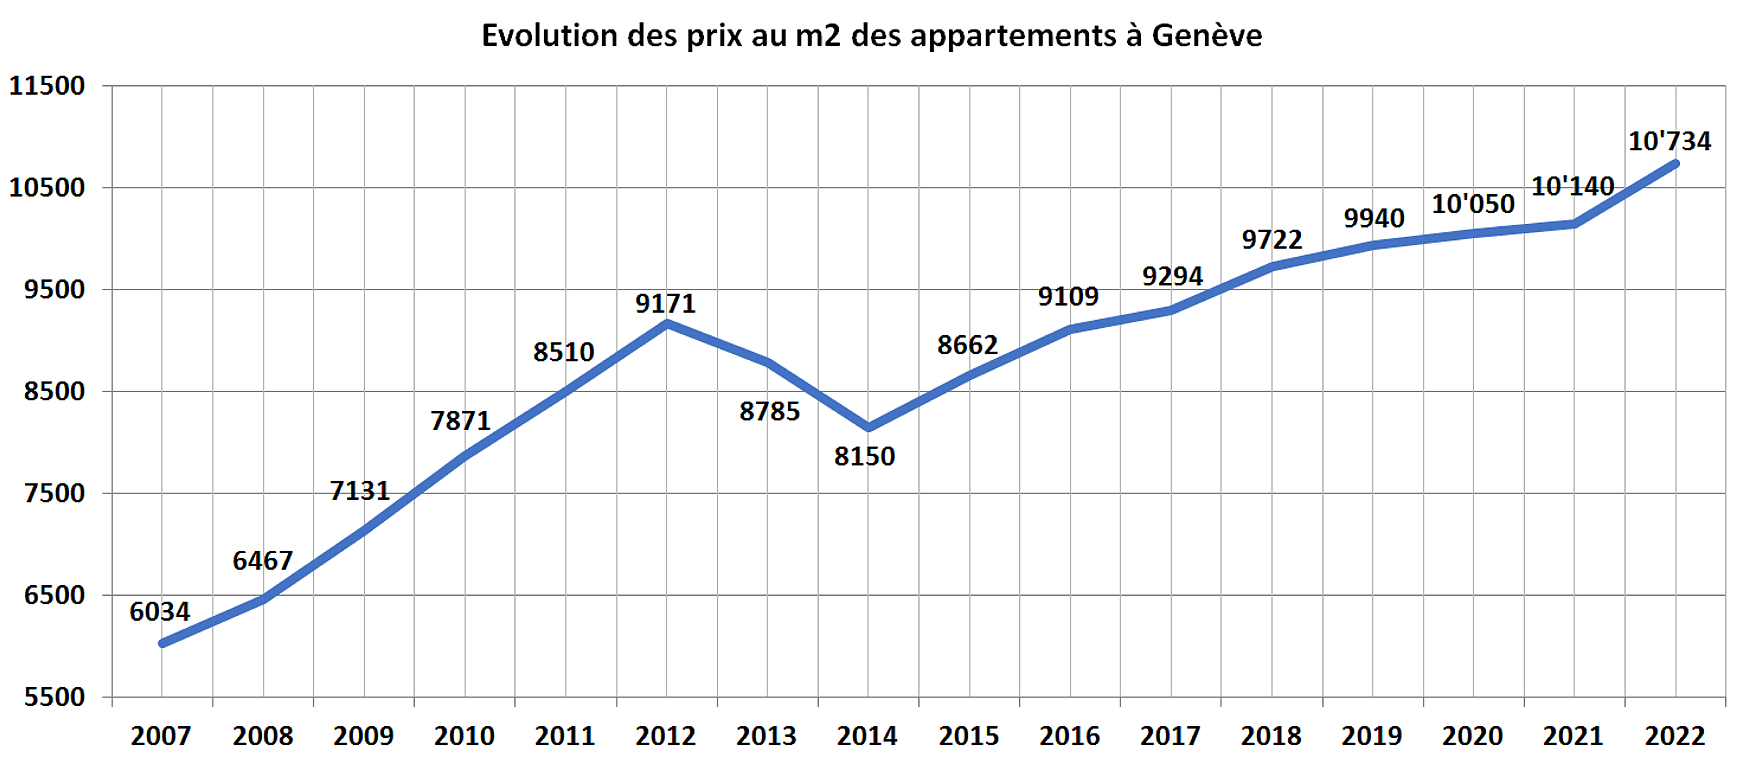 evolution prix m2 appartement geneve 2022